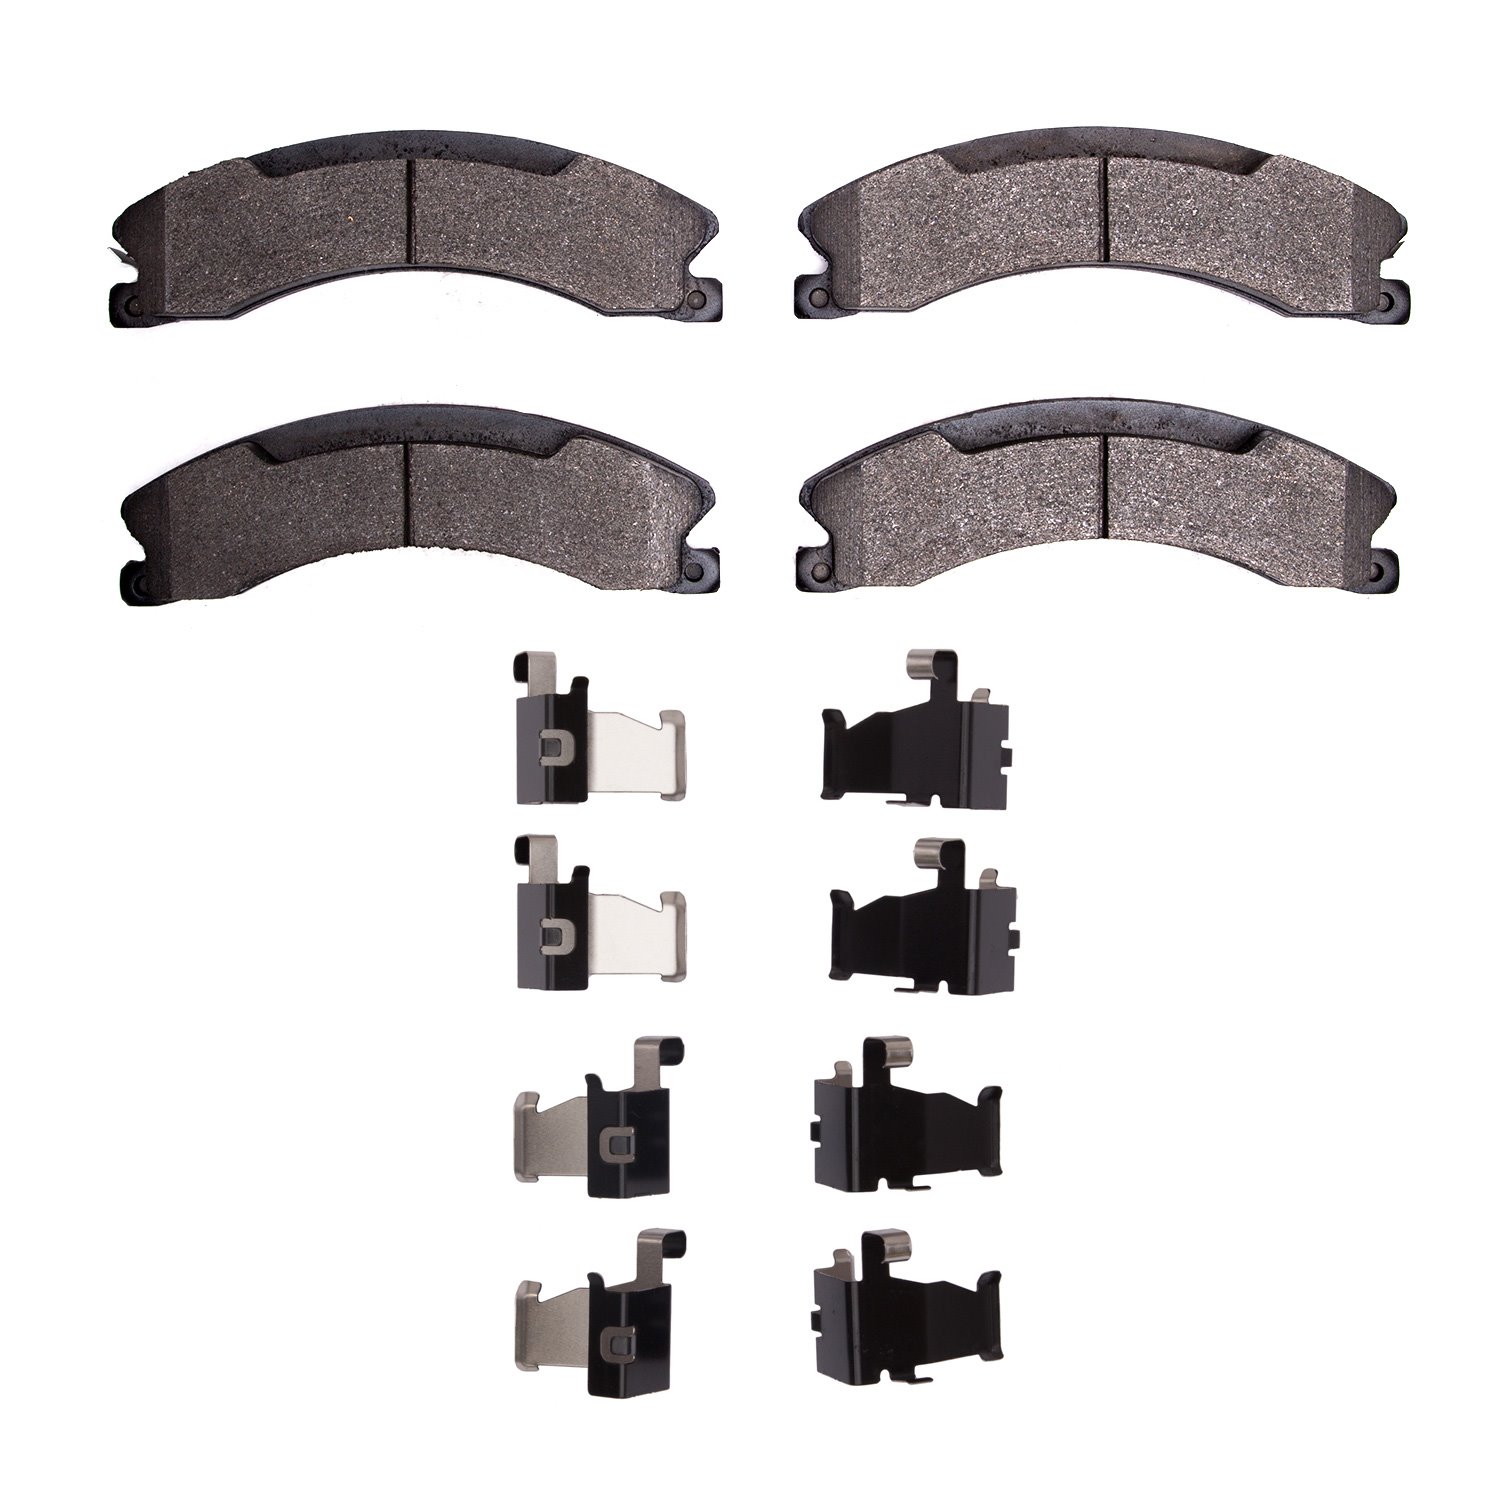 1400-1565-01 Ultimate-Duty Brake Pads & Hardware Kit, Fits Select Multiple Makes/Models, Position: Fr,Front,Rear,Rr